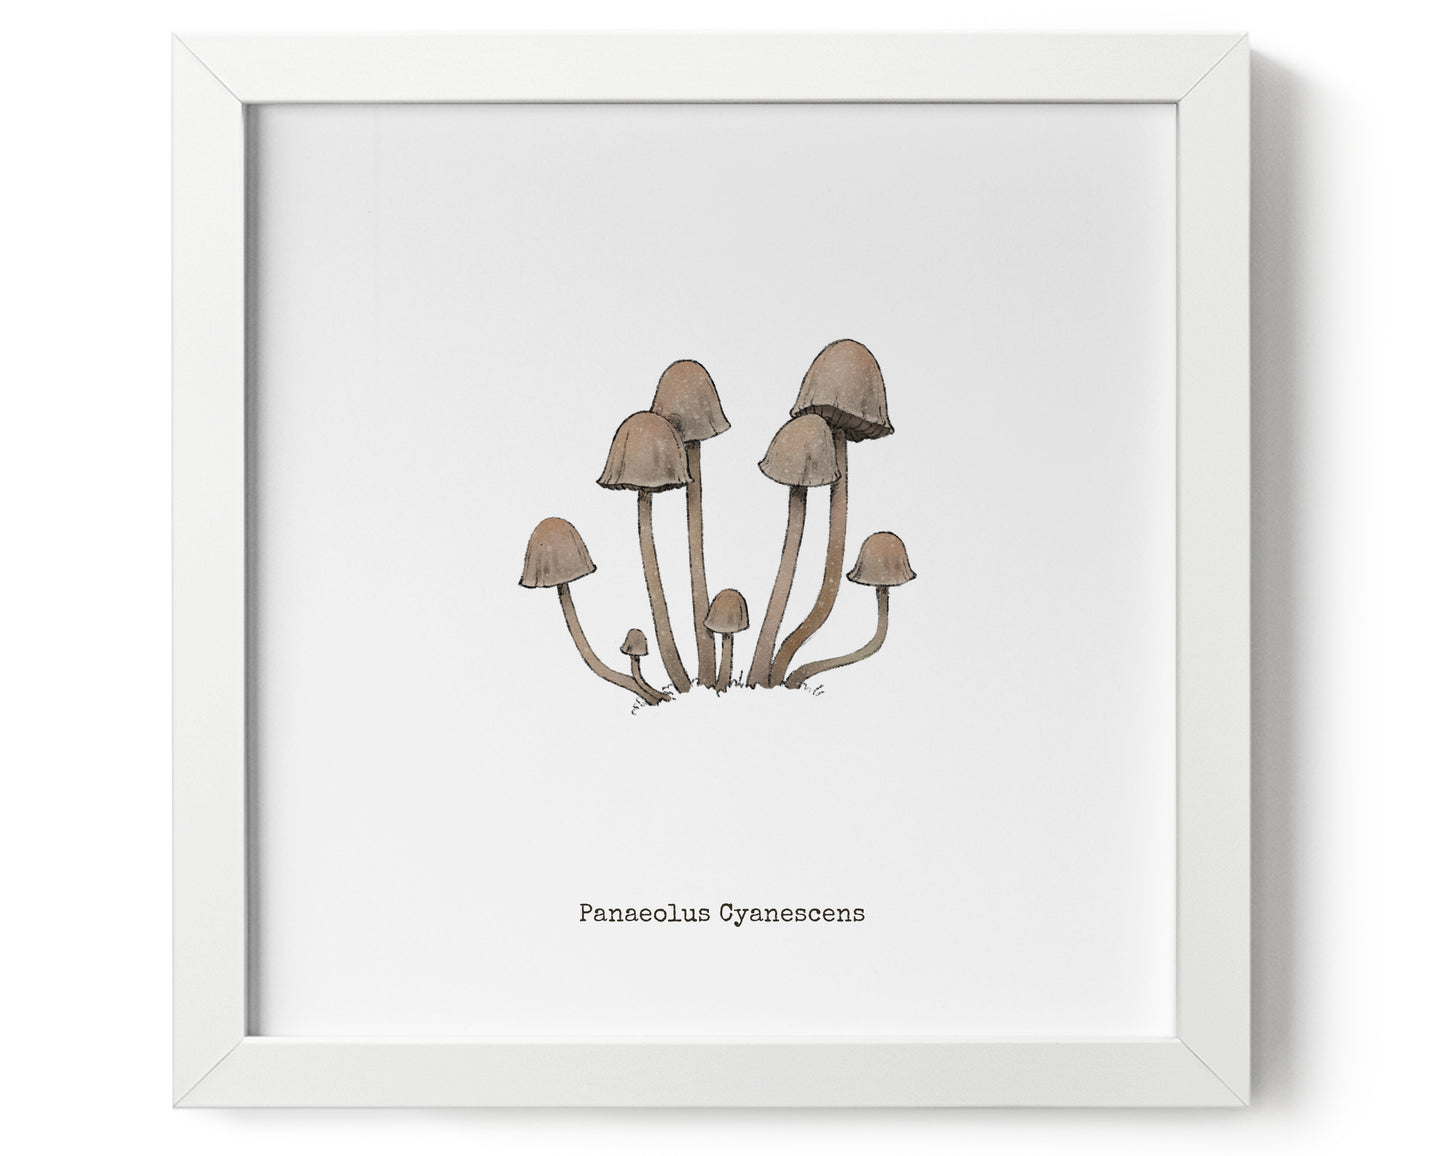 "Panaeolus Cyanescens" by Catherine Hébert - Panaeolus Cyanescens Mushroom Art Print - 0"x0" size